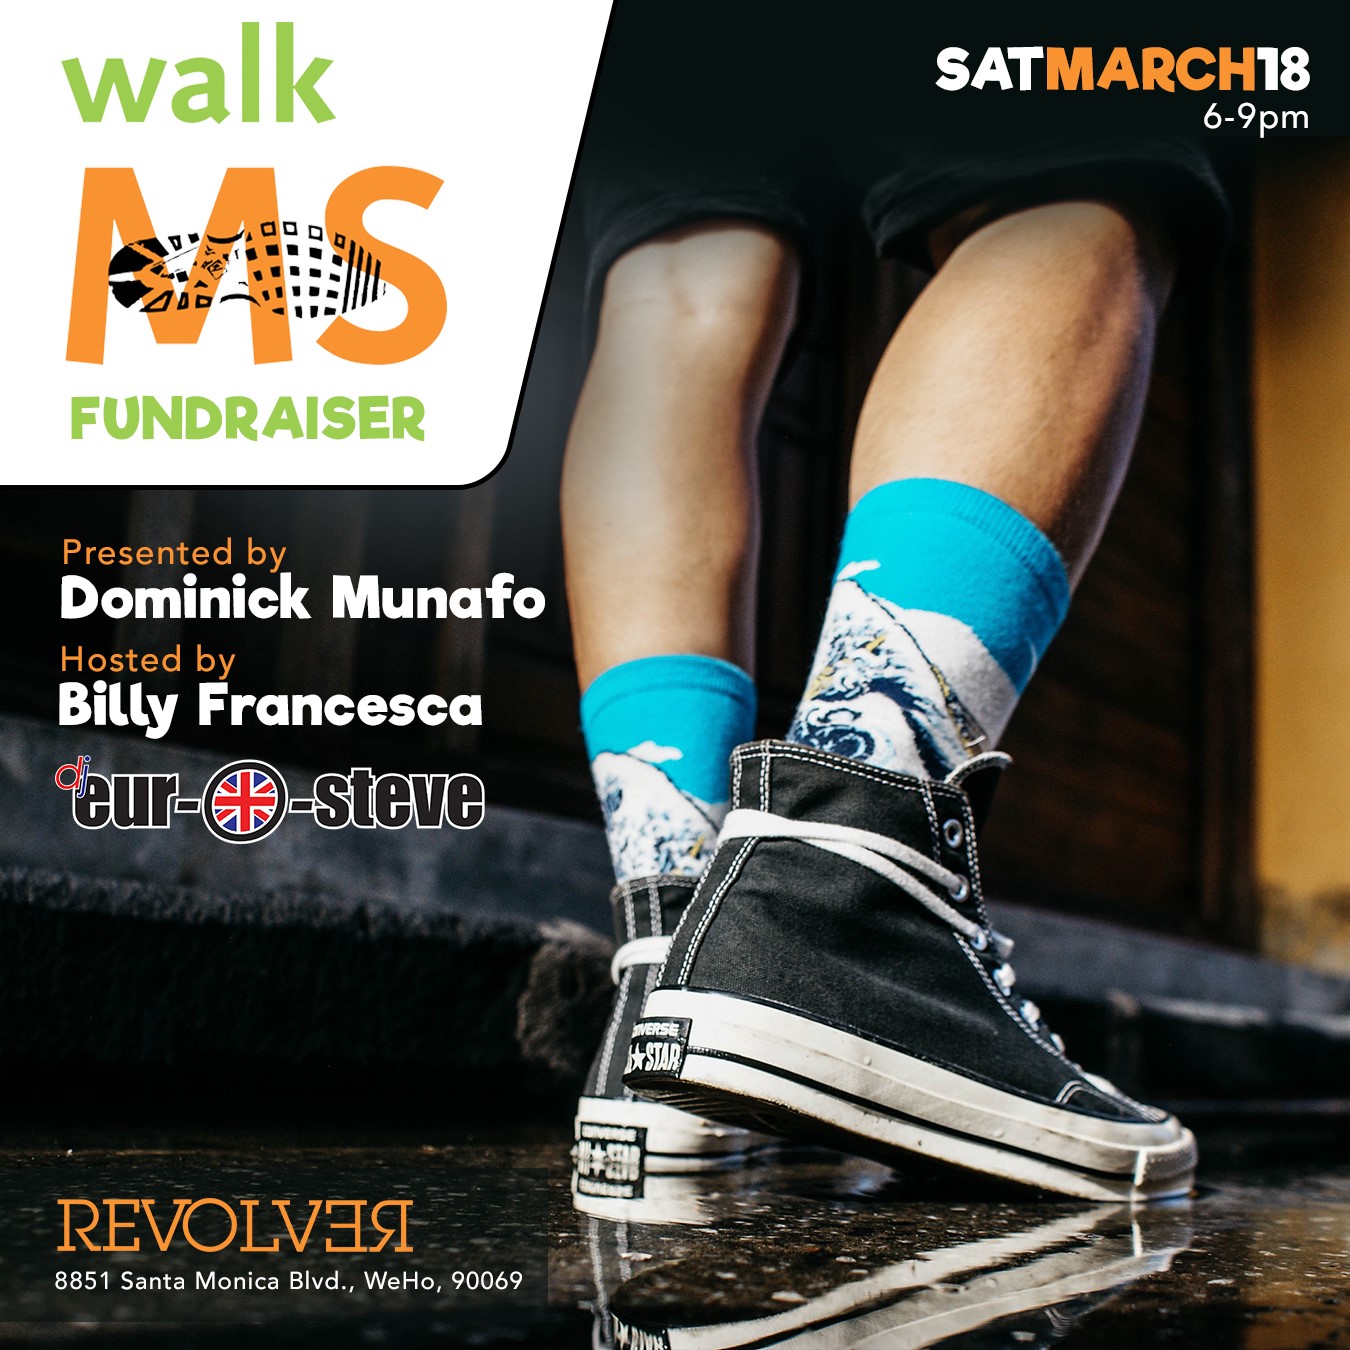 Walk MS Fundraiser